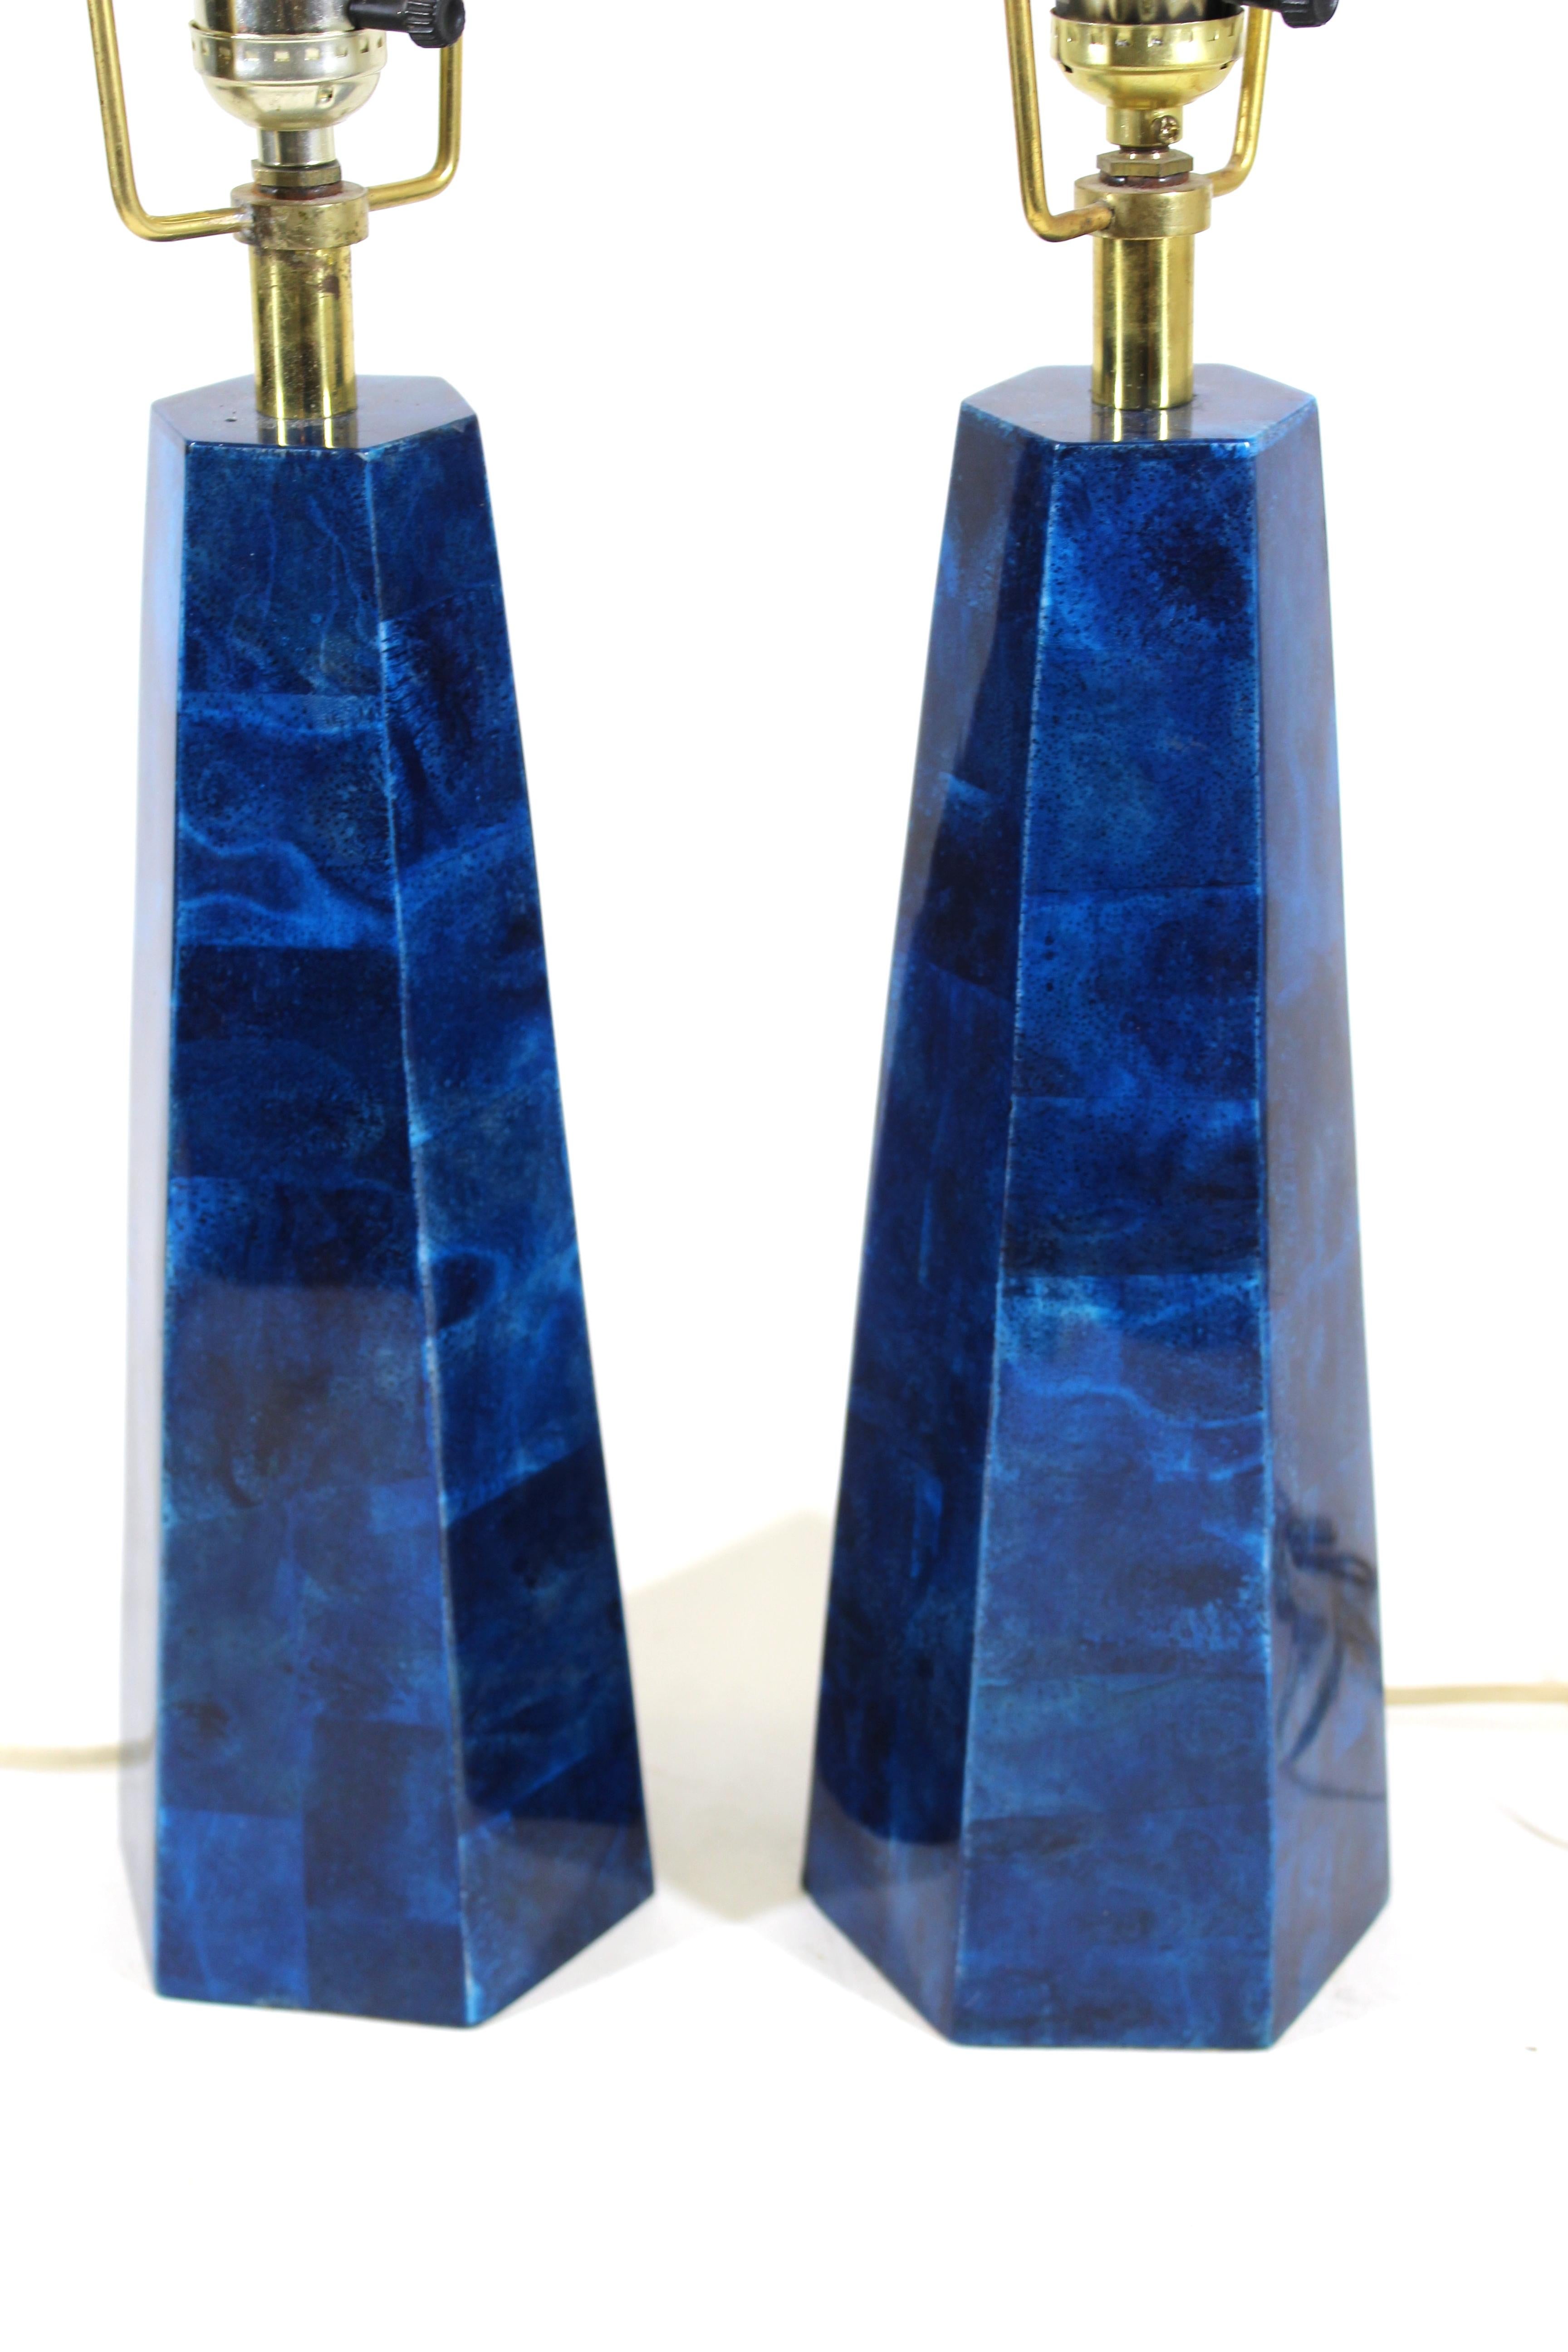 Lacquered Aldo Tura Attributed Italian Modern Blue Goatskin Table Lamps